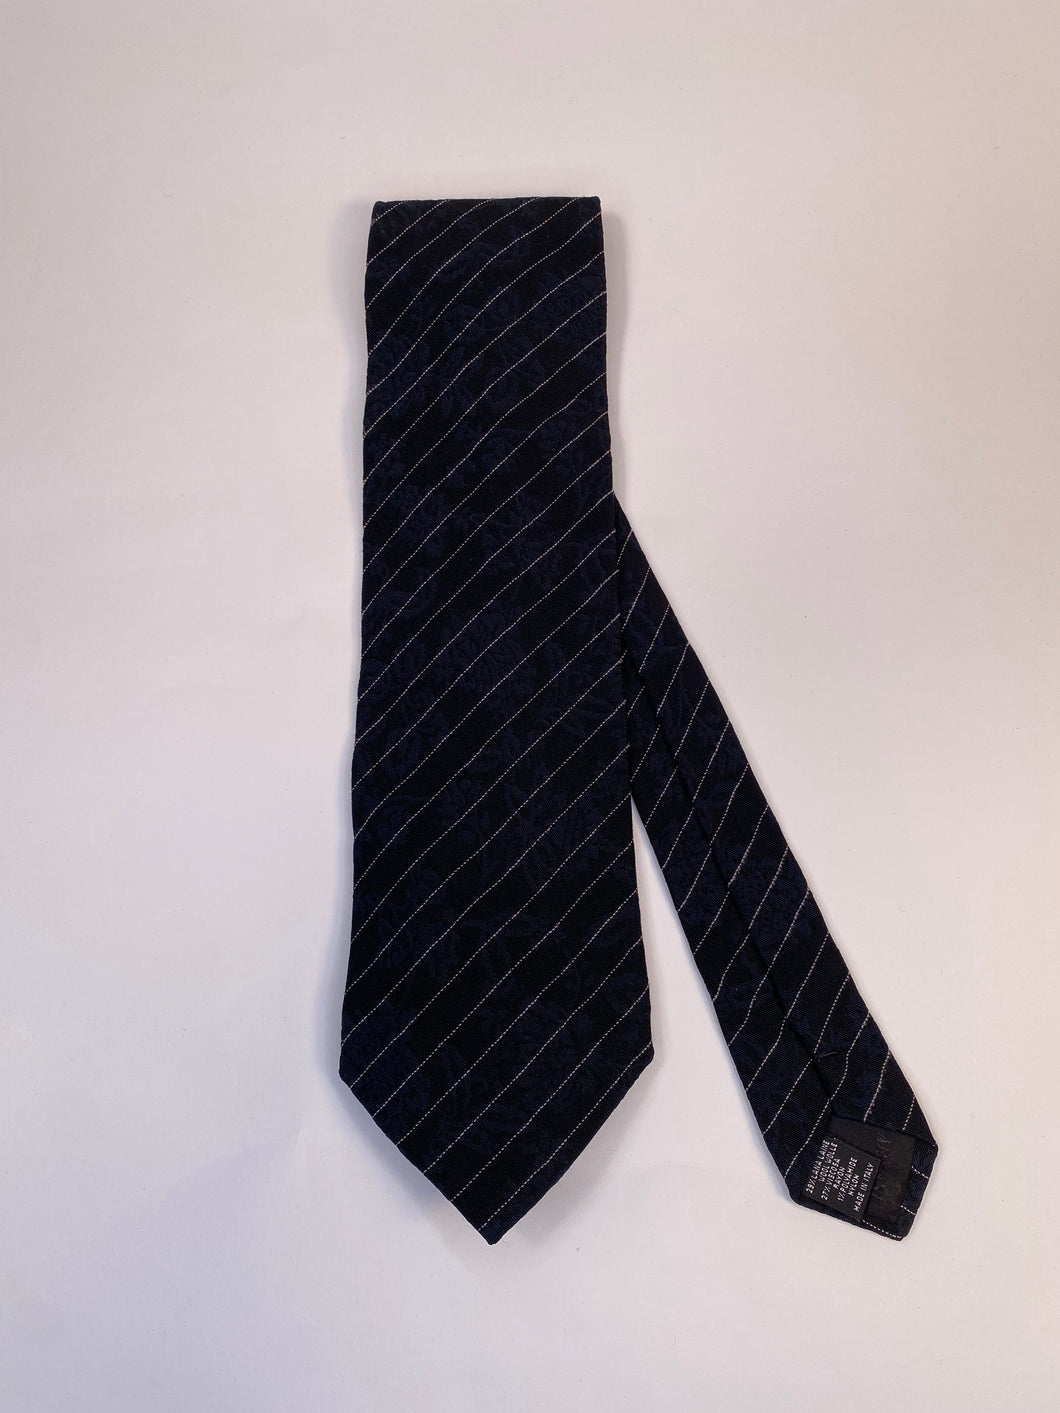 Giorgio Armani necktie black / floral